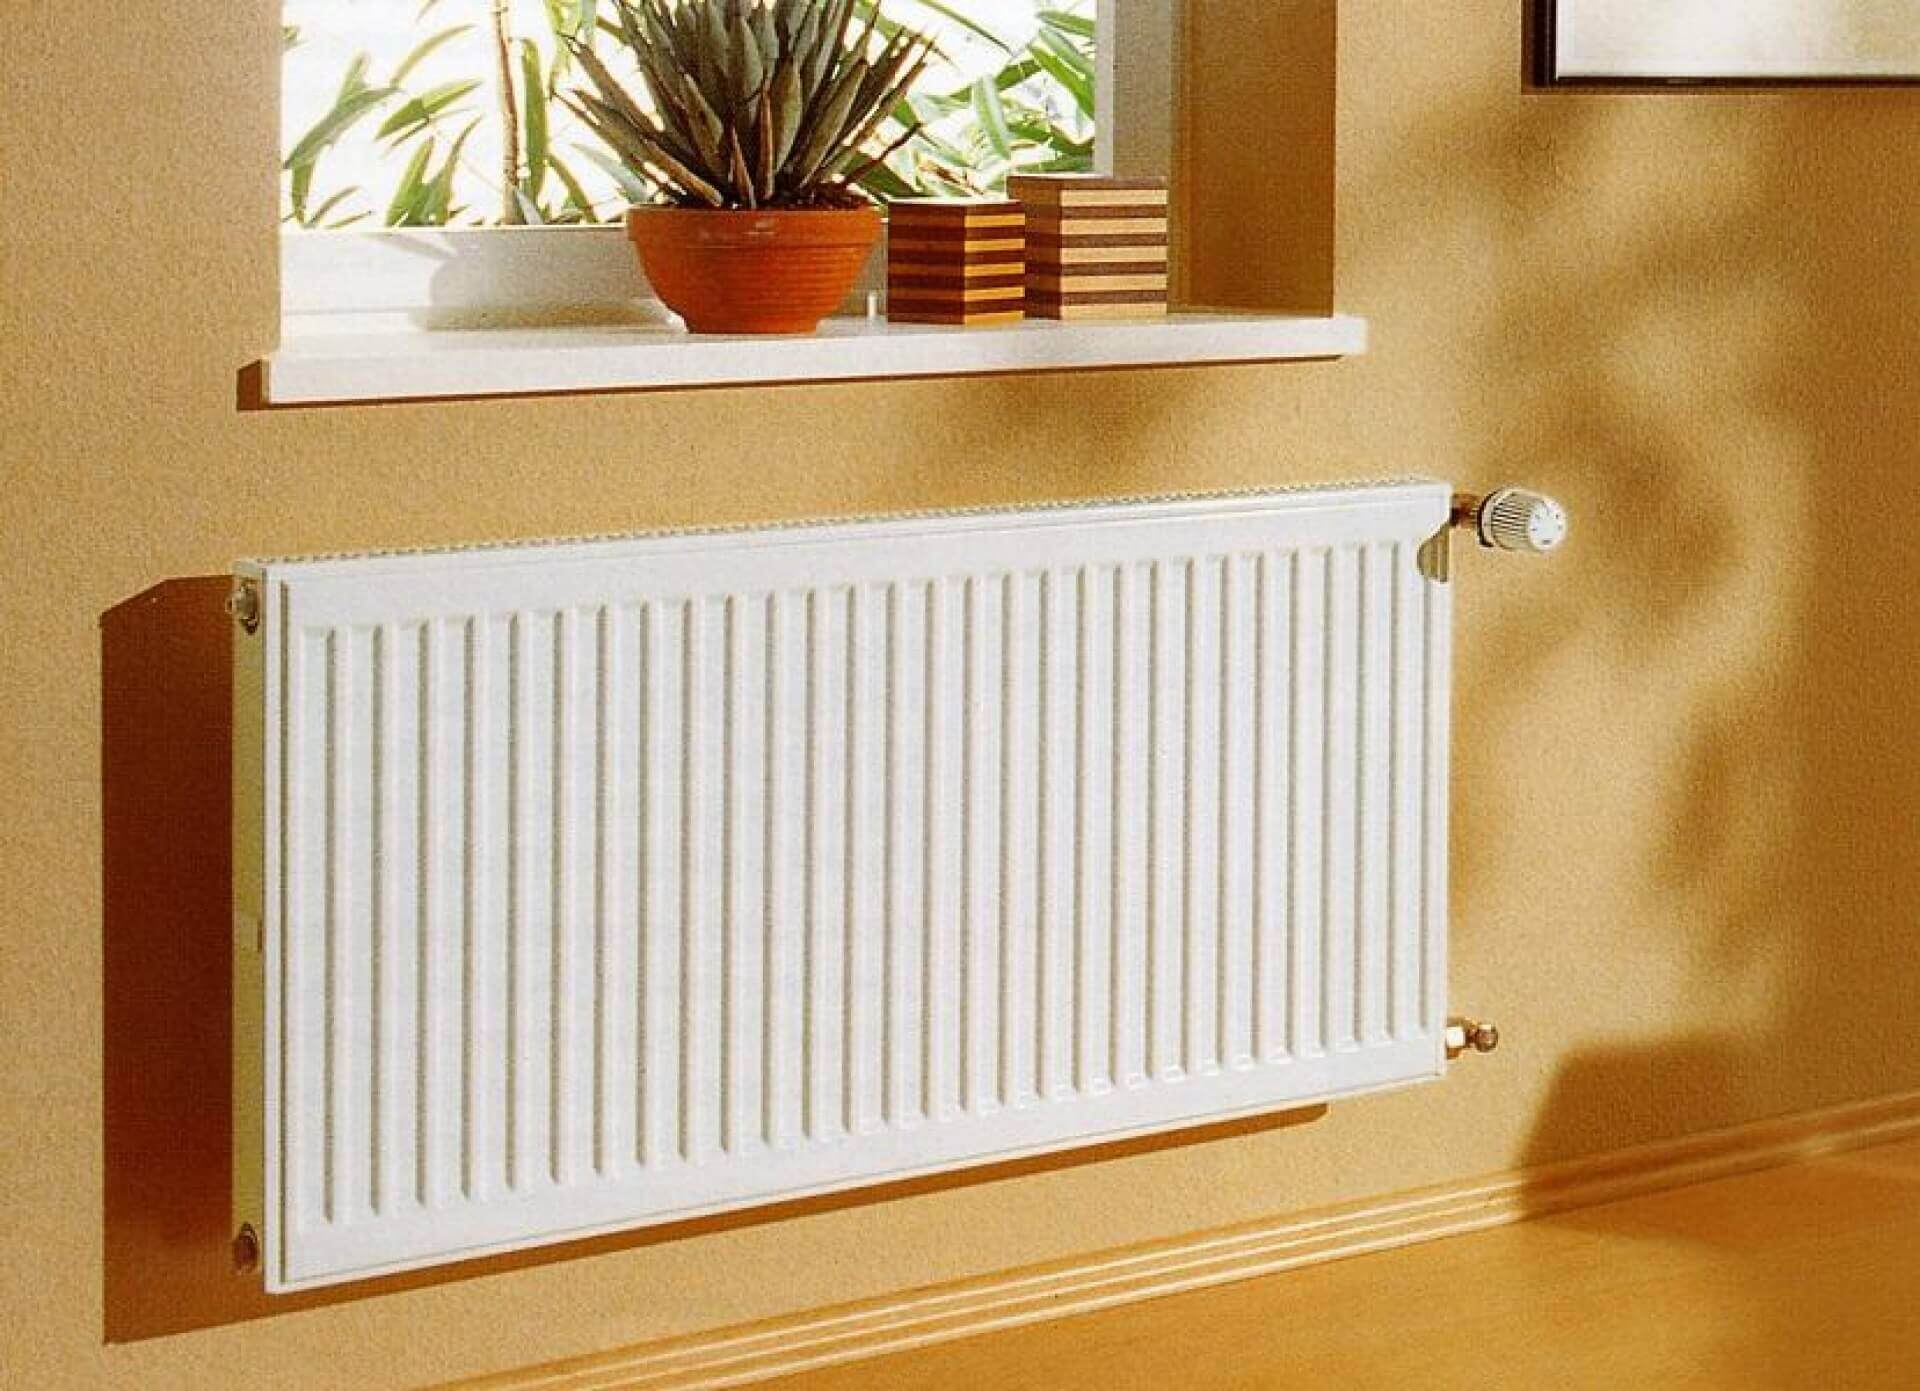 Panel radiator